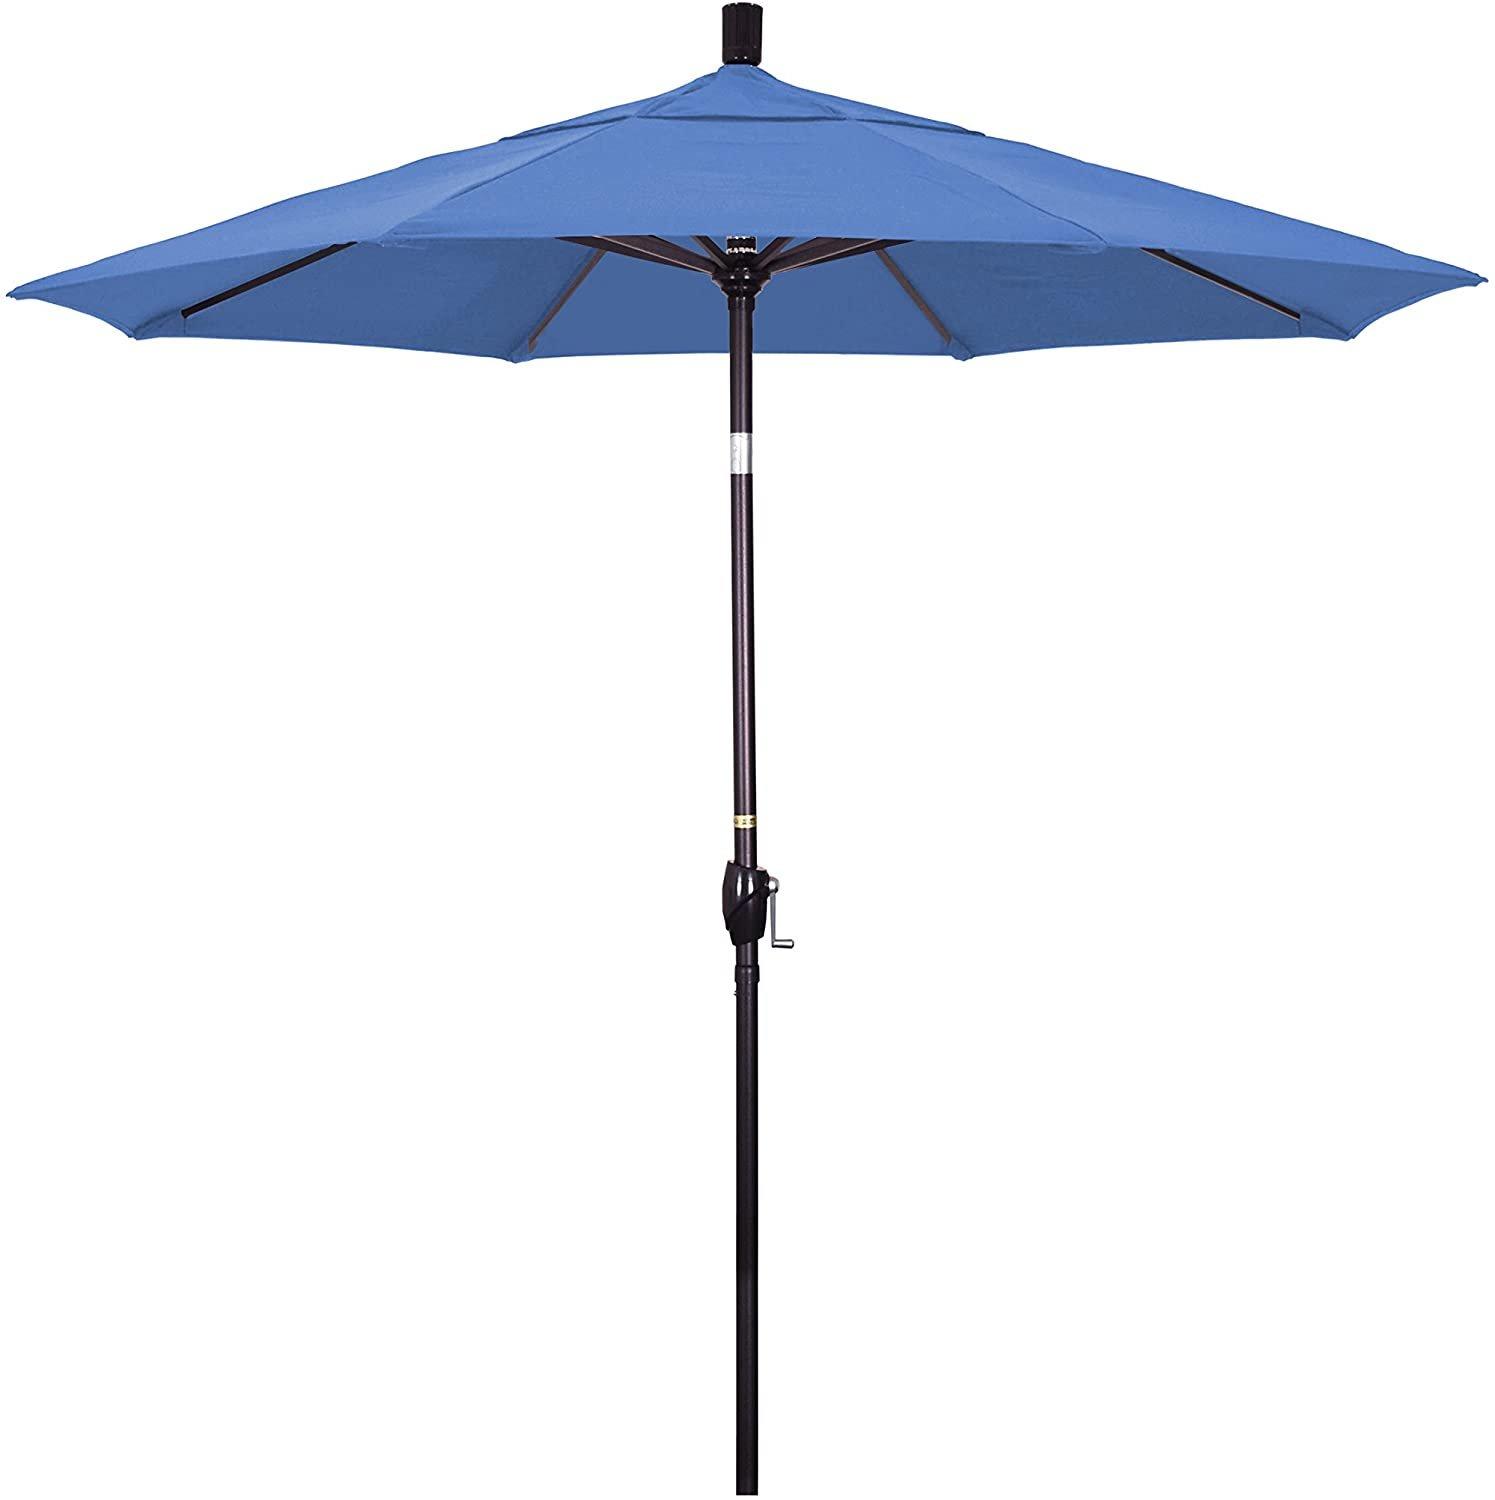 7.5 ft Market Umbrella Bronze/Hunter Green